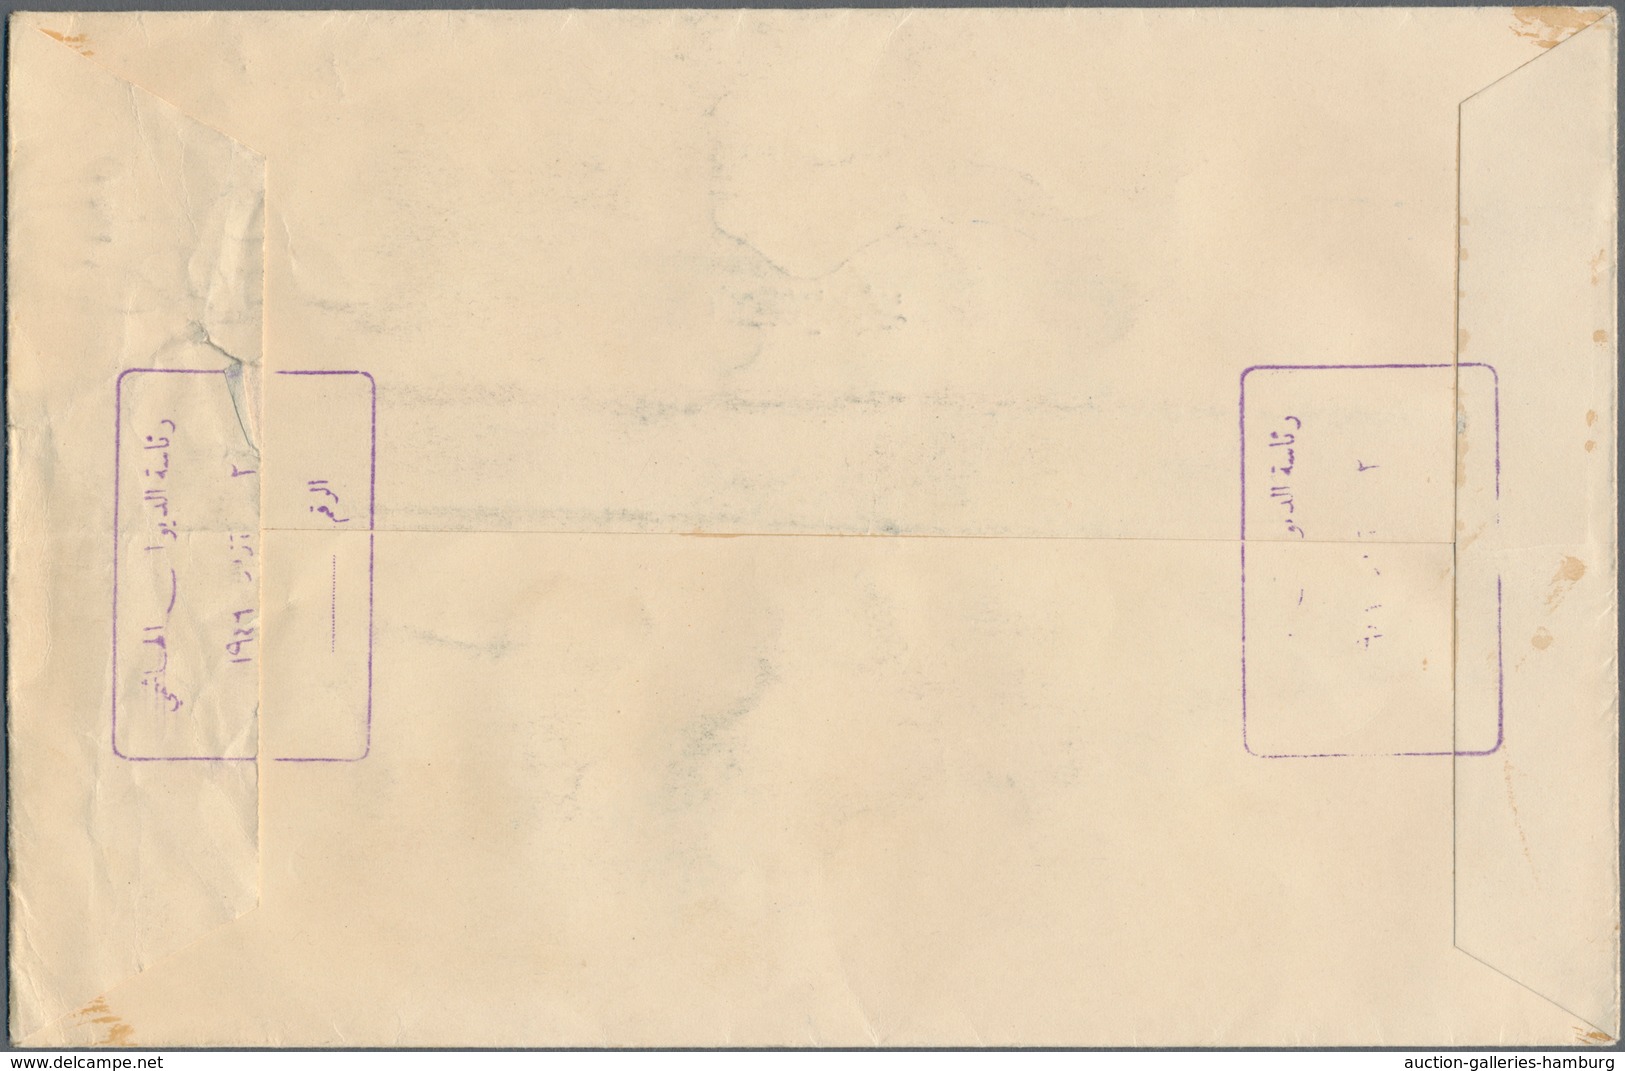 Jordanien: 1949, Official Envelope With "Government El Urduniye" Coat Of Arms Imprint And Circular A - Jordania